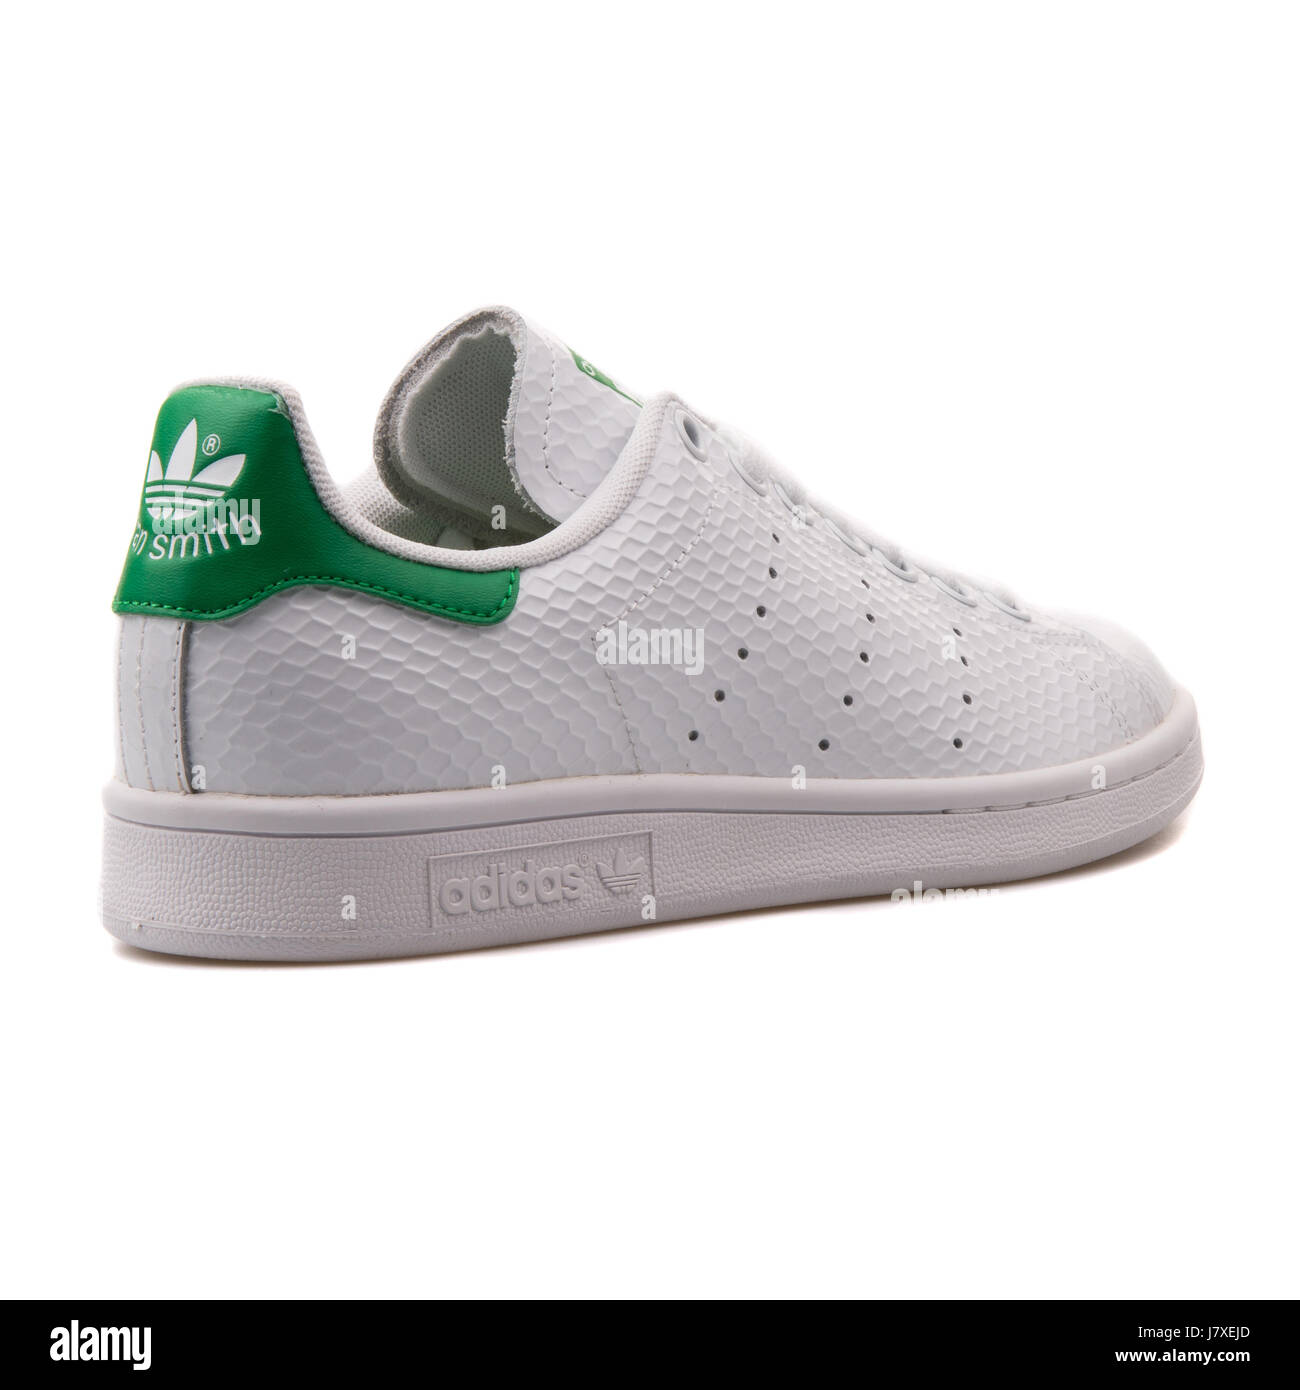 Adidas Originals Stan Smith W Women's White with Green Sneakers - B35443  Stock Photo - Alamy